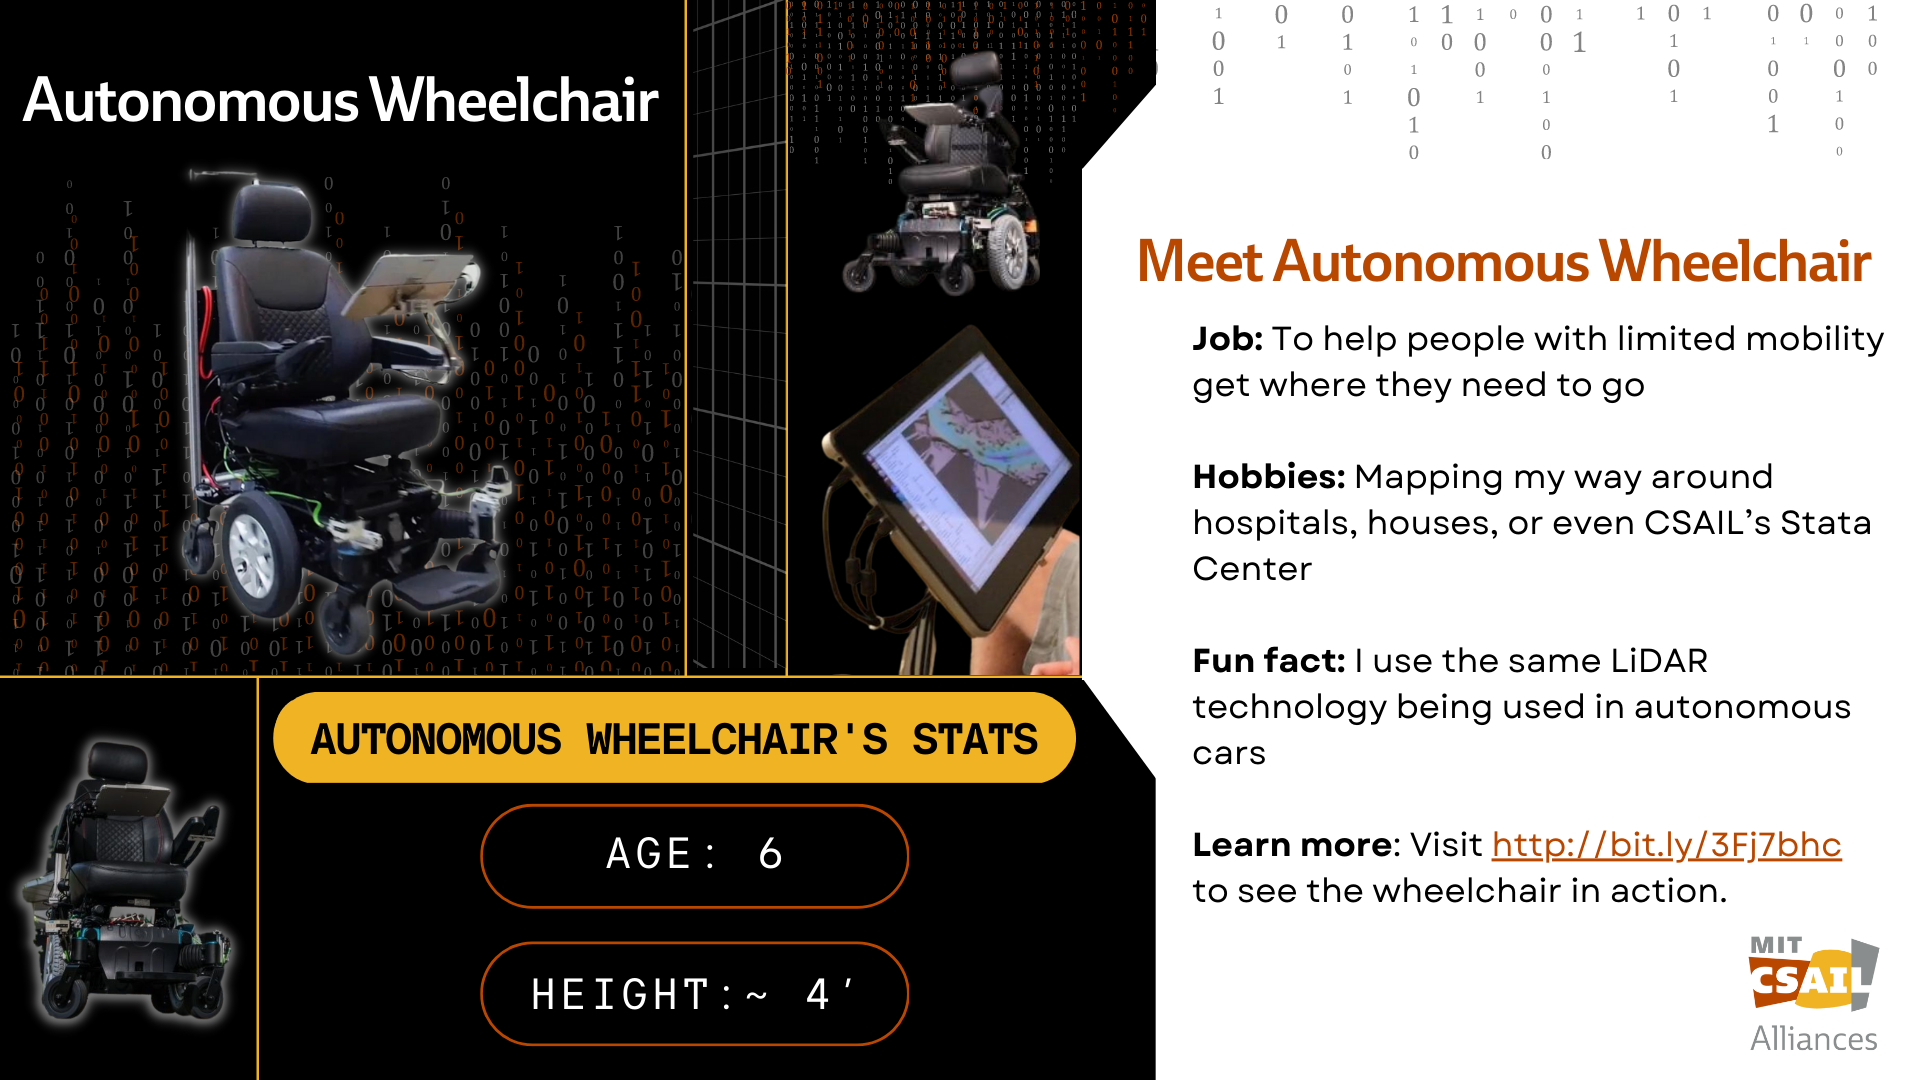 CSAIL Autonomous Wheelchair photo collage; with text that reads "Autonomous Wheelchair"